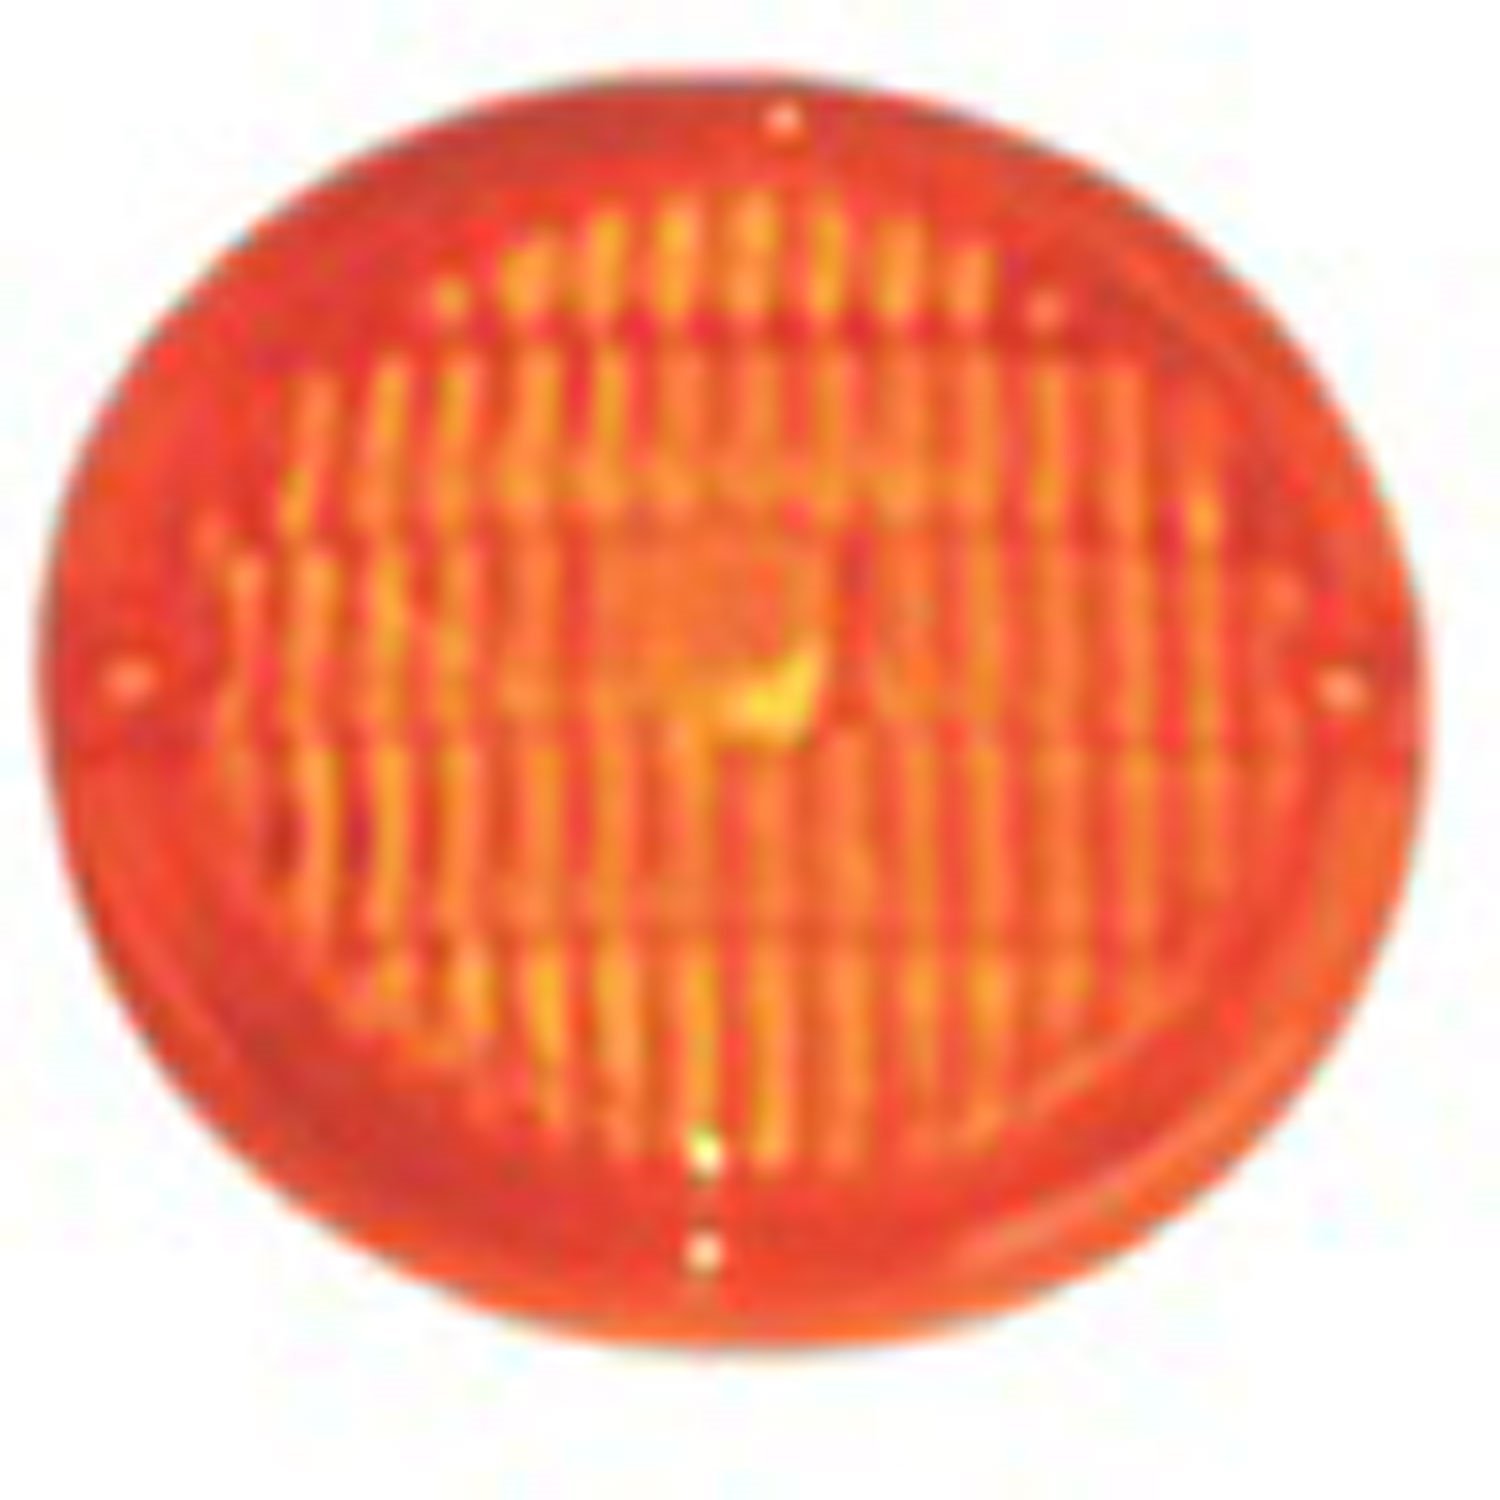 This amber parking lamp / turn signal lens